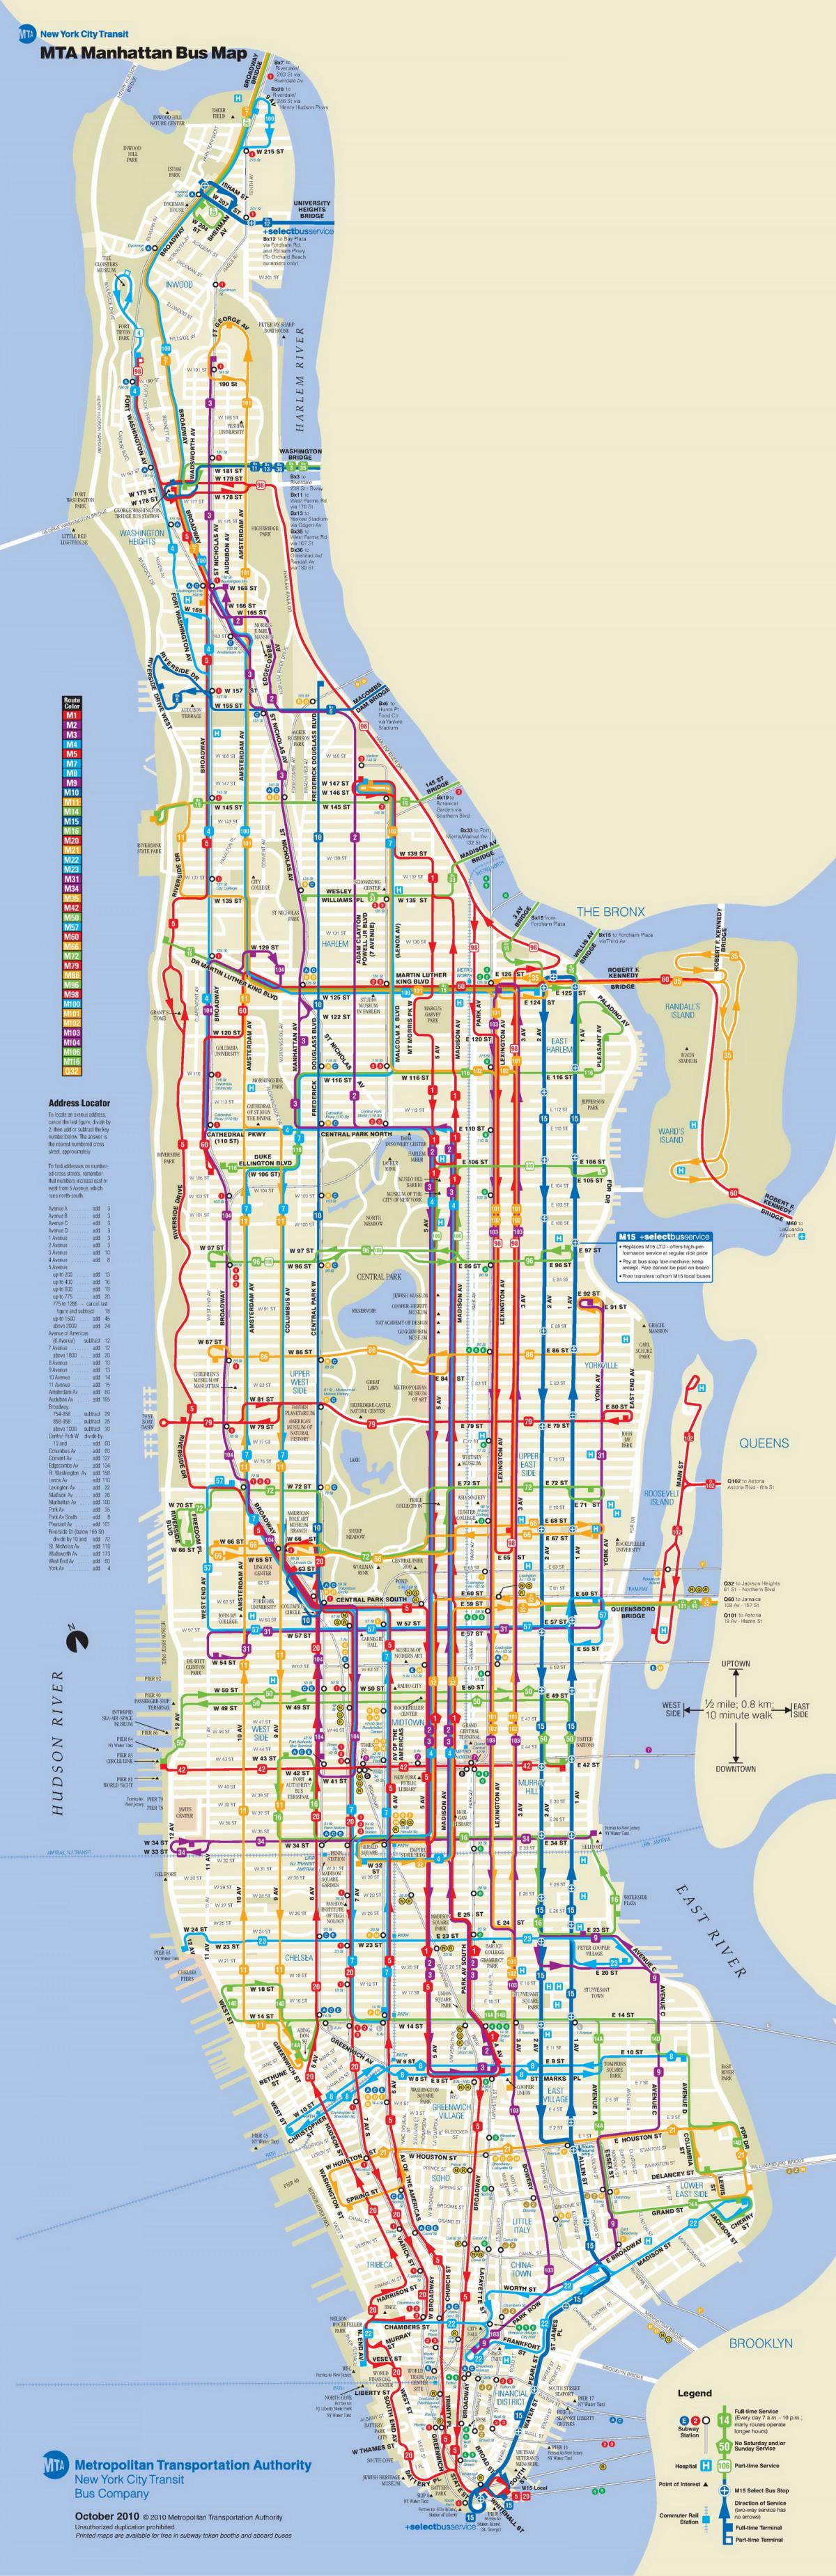 Mta bus map Manhattan Manhattan bus map with stops (New York USA)